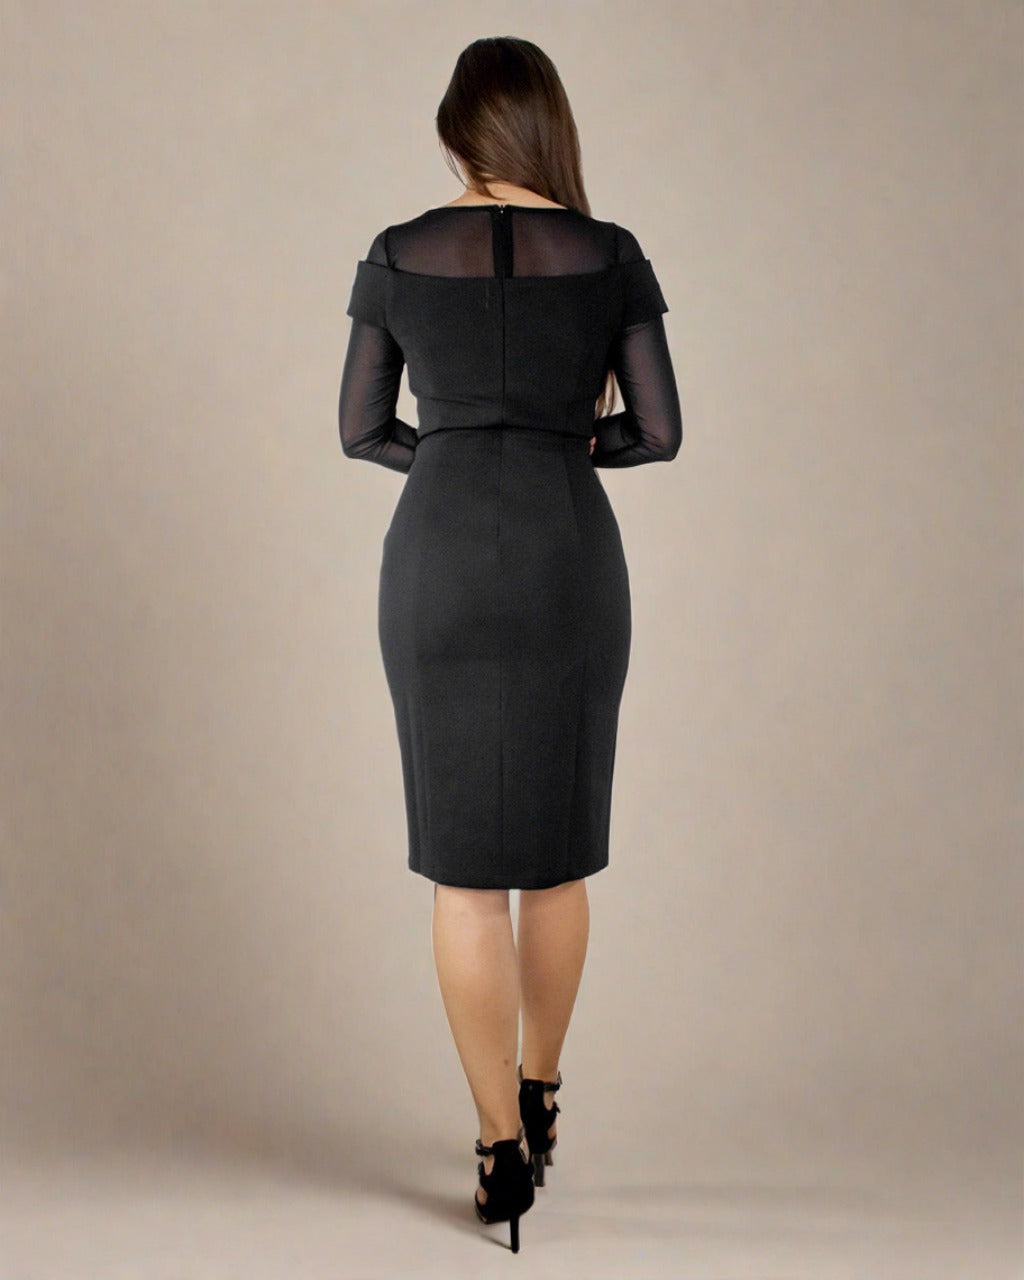 ADKN Kera Black Long Sleeve Bodycon Mini Dress